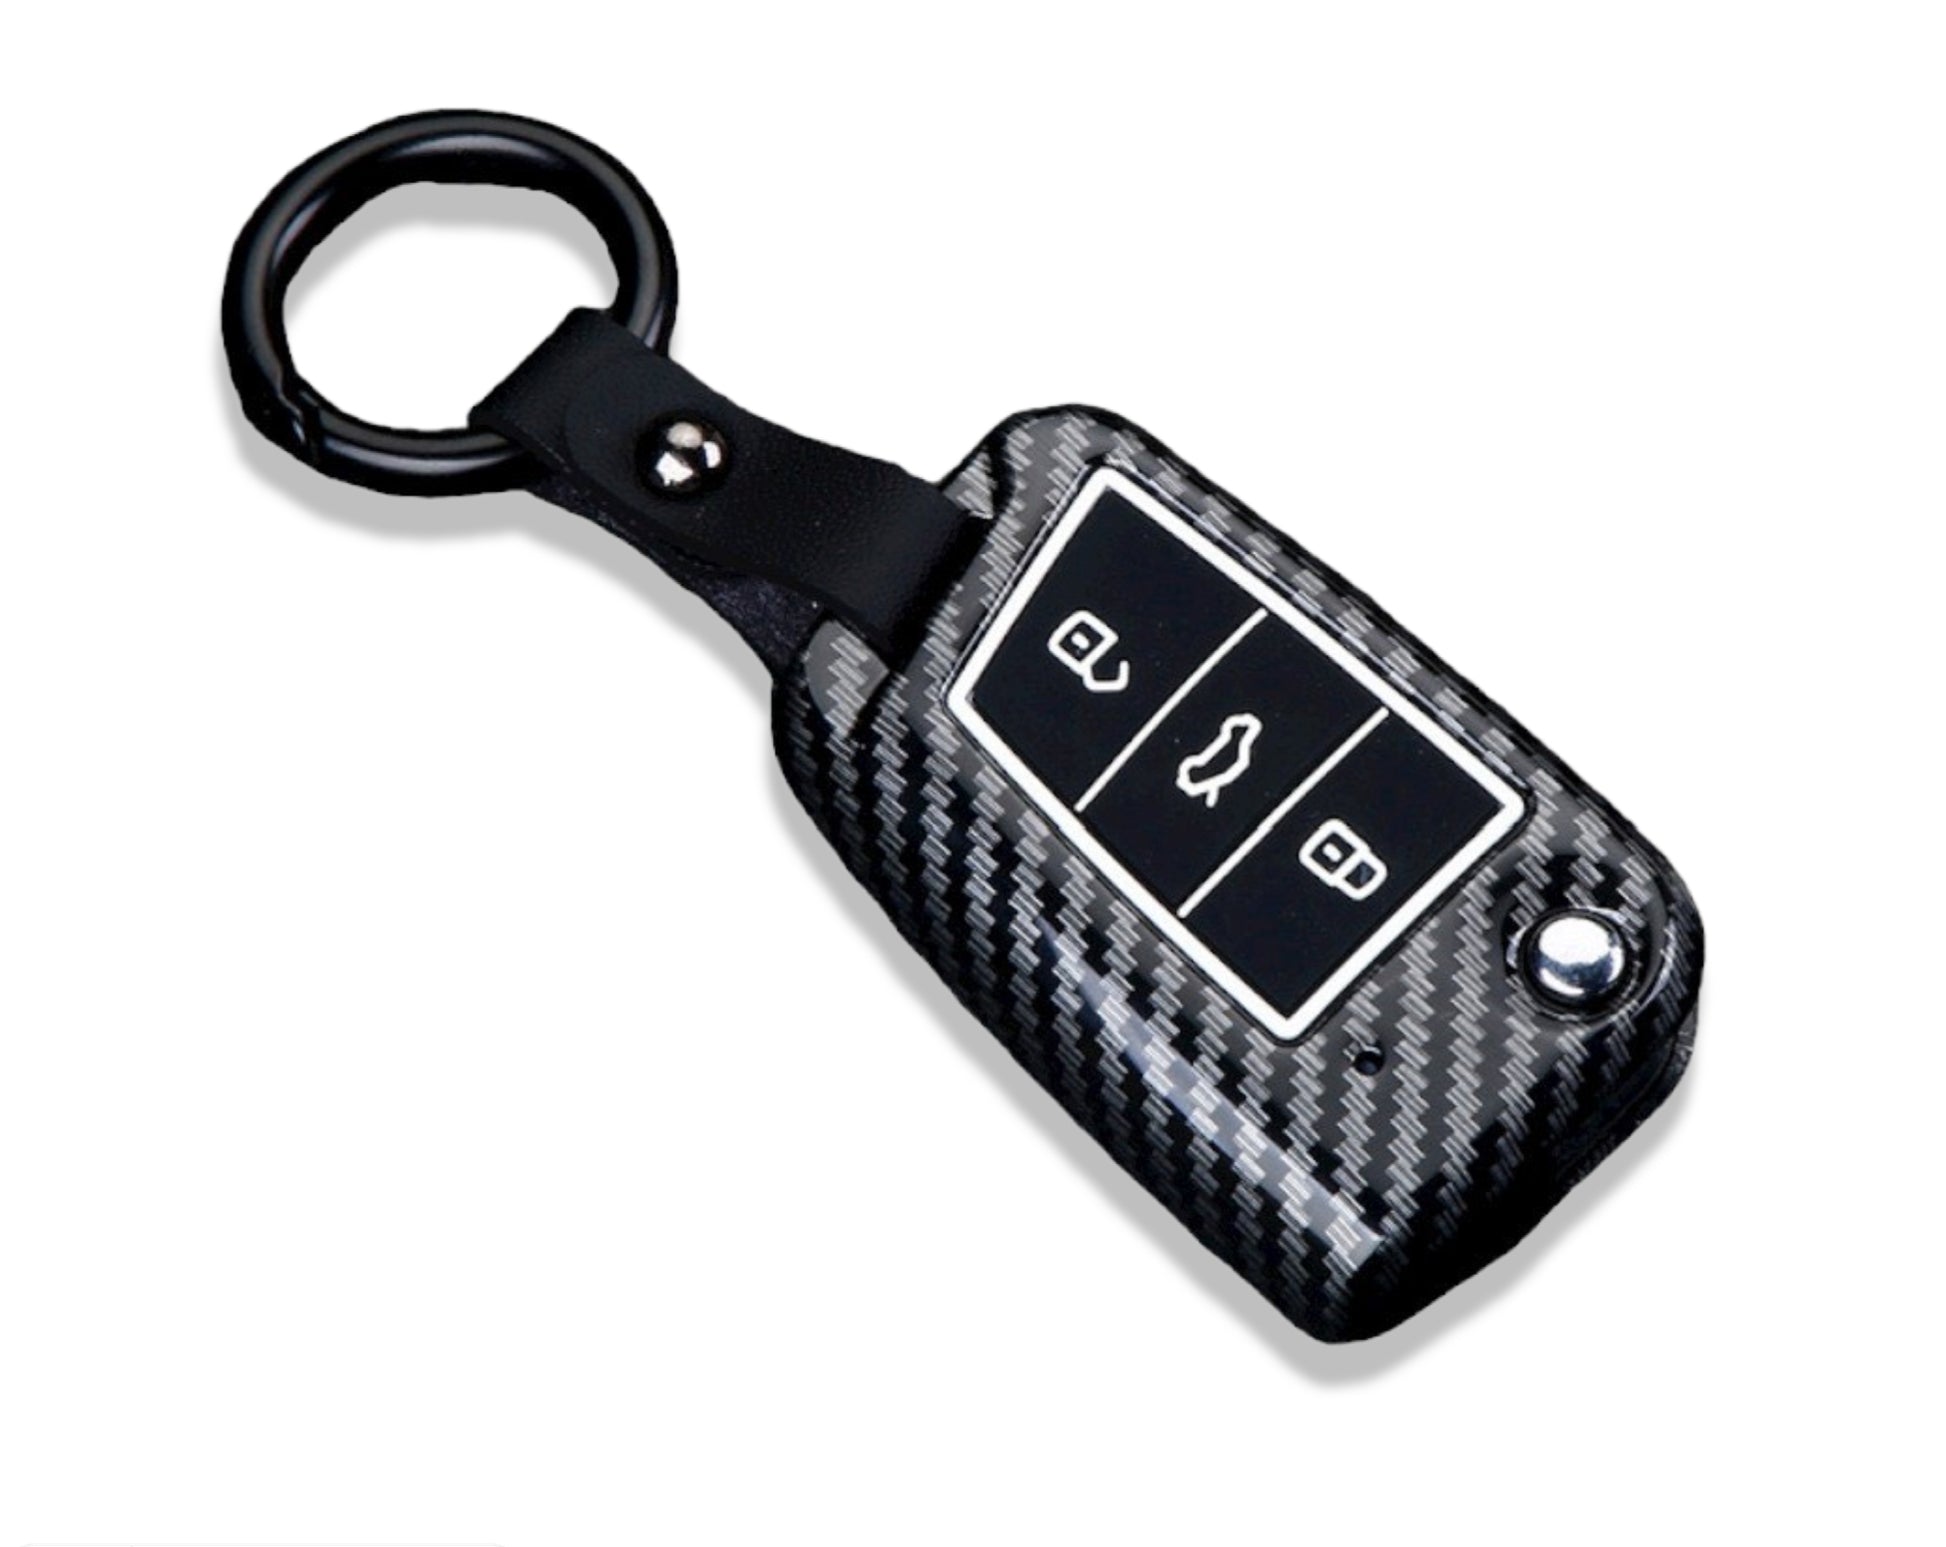 Volkswagen/Skoda car key cover | Key fob cover for VW Golf, Passat, Polo,  Tiguan, Touareg. Carbon Fibre Design